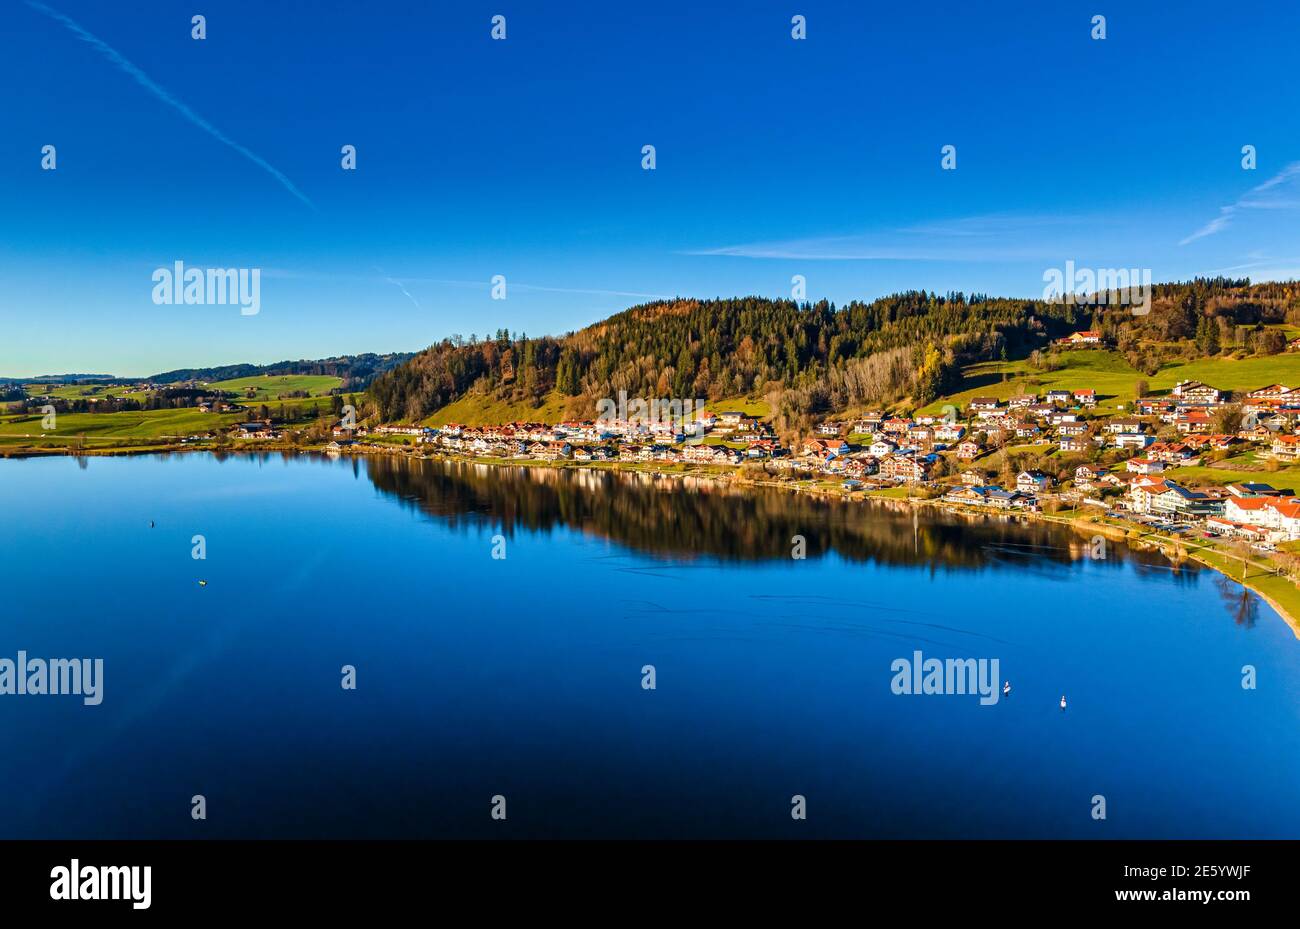 Hopfen am See, Hopfensee, vicino a Fuessen, Drone shot, Ostallgau, Allgau, Swabia, Alpino, Baviera, Germania, Europa Foto Stock